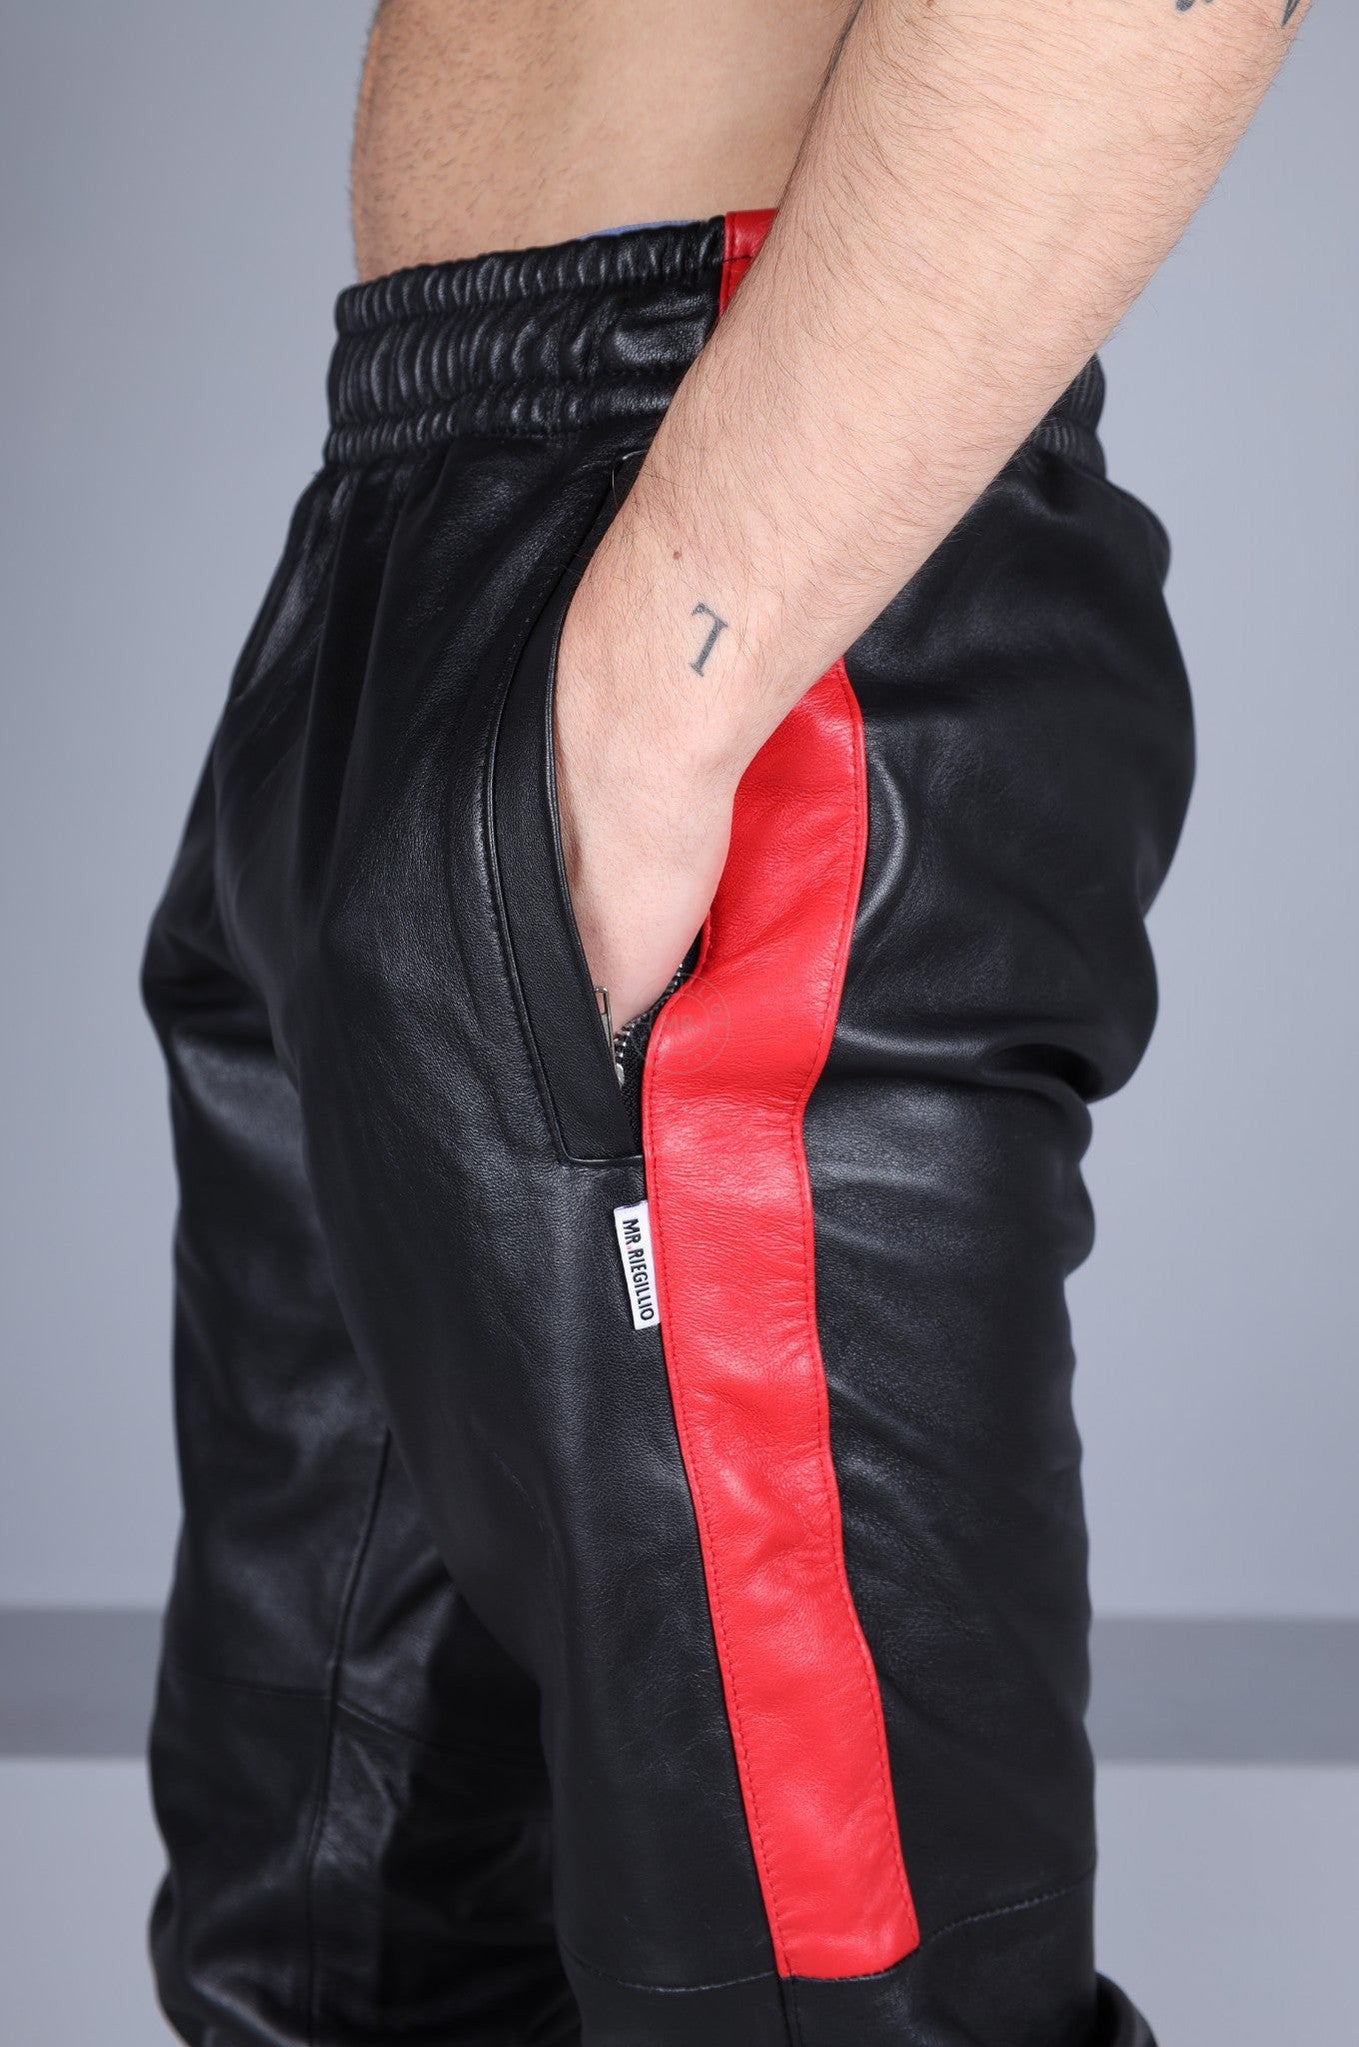 Black Leather Tracksuit Pants - Red Stripe at MR. Riegillio